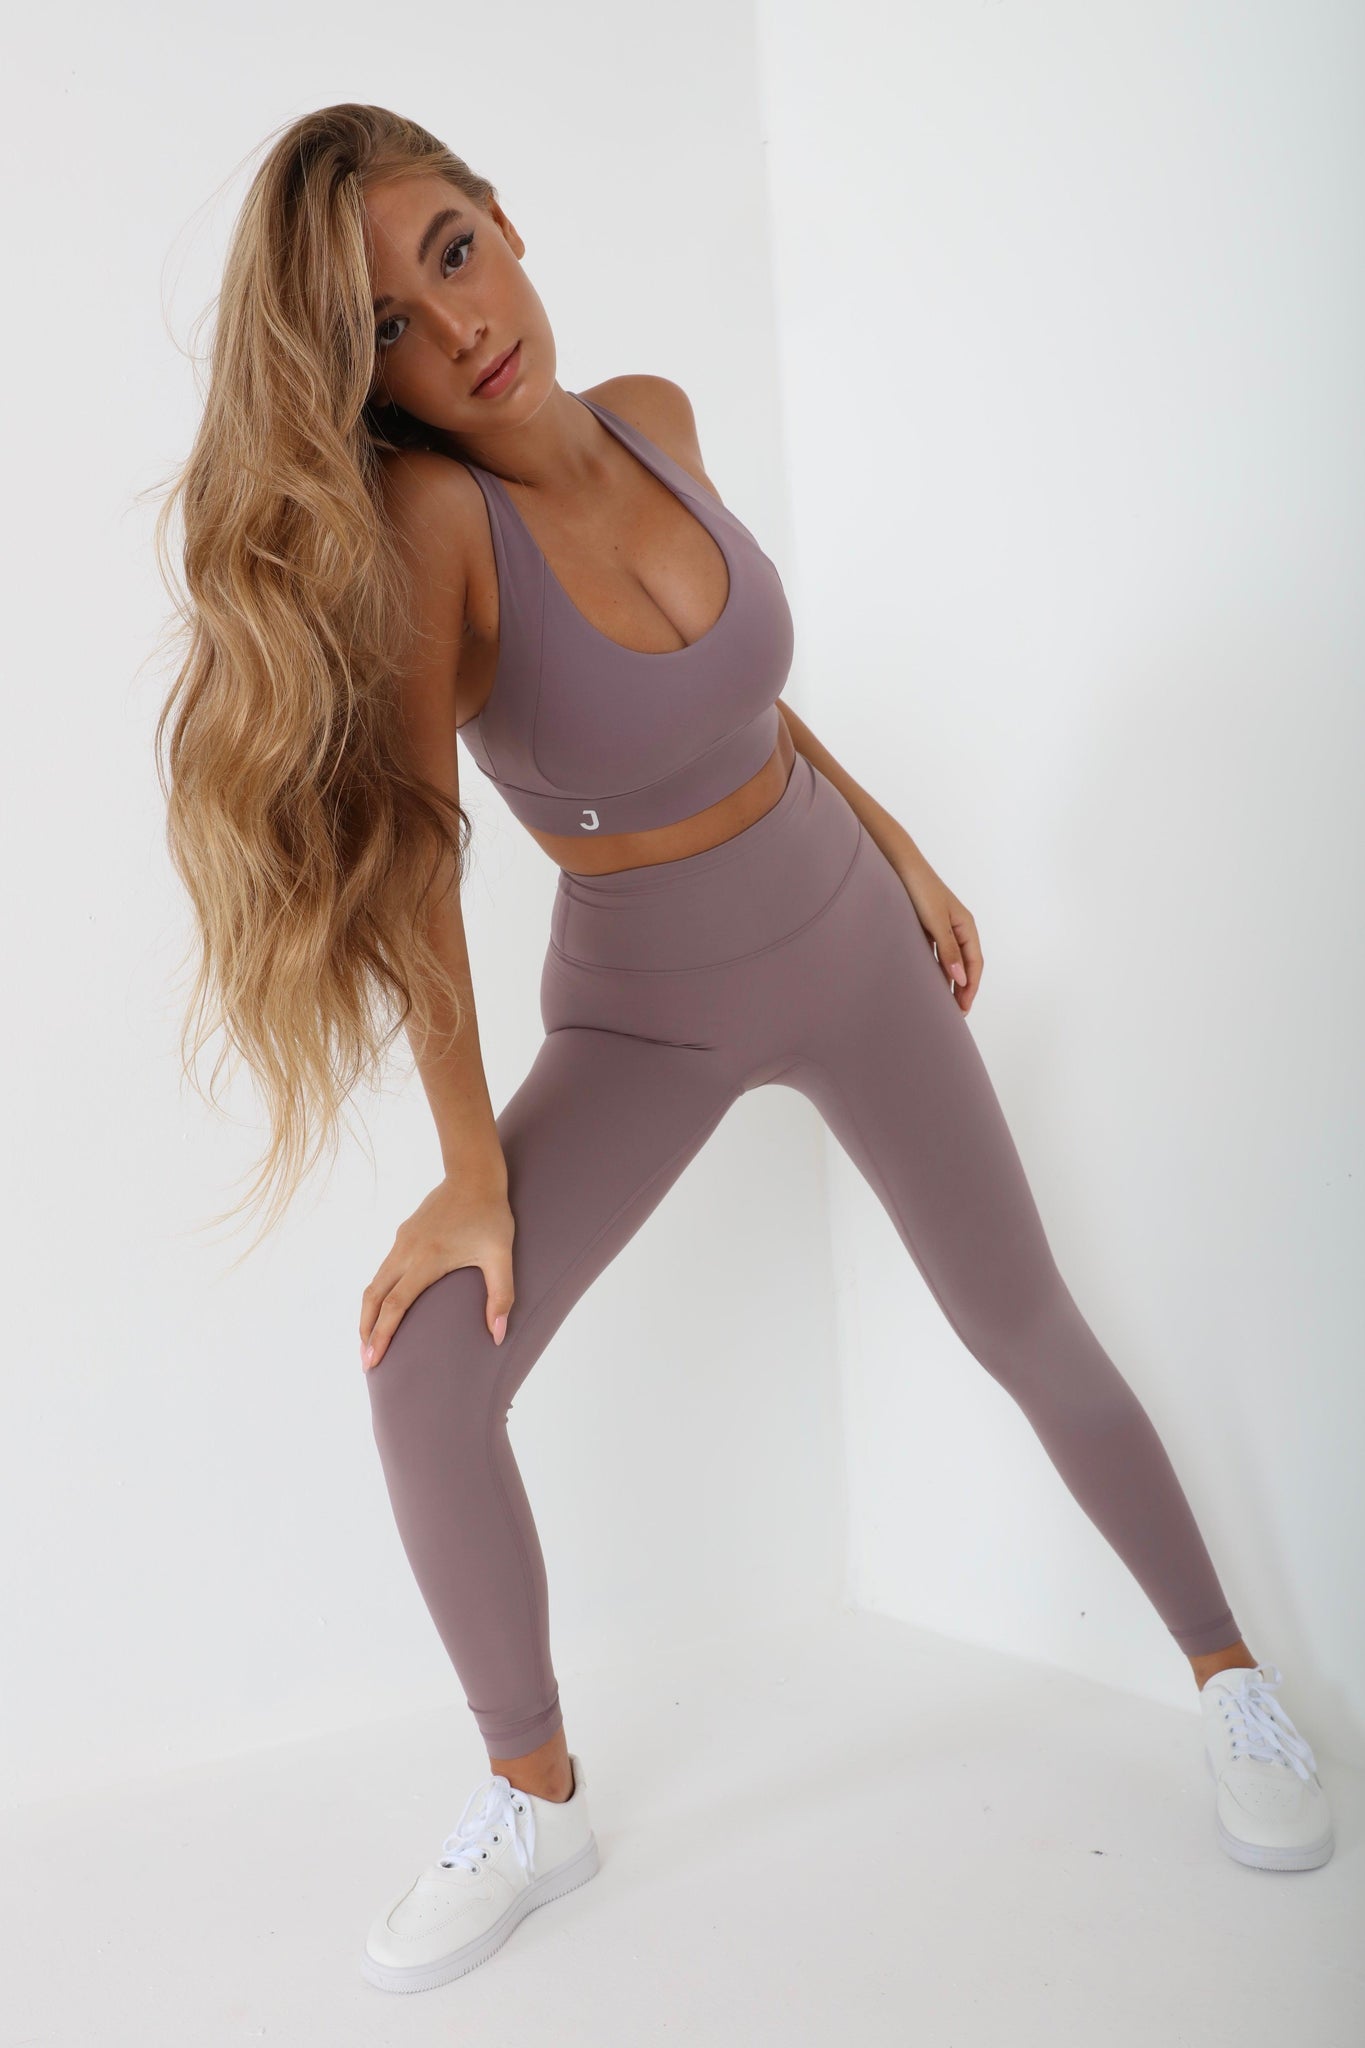 JUV fresh legging in purple color, full body front view, model in movement.